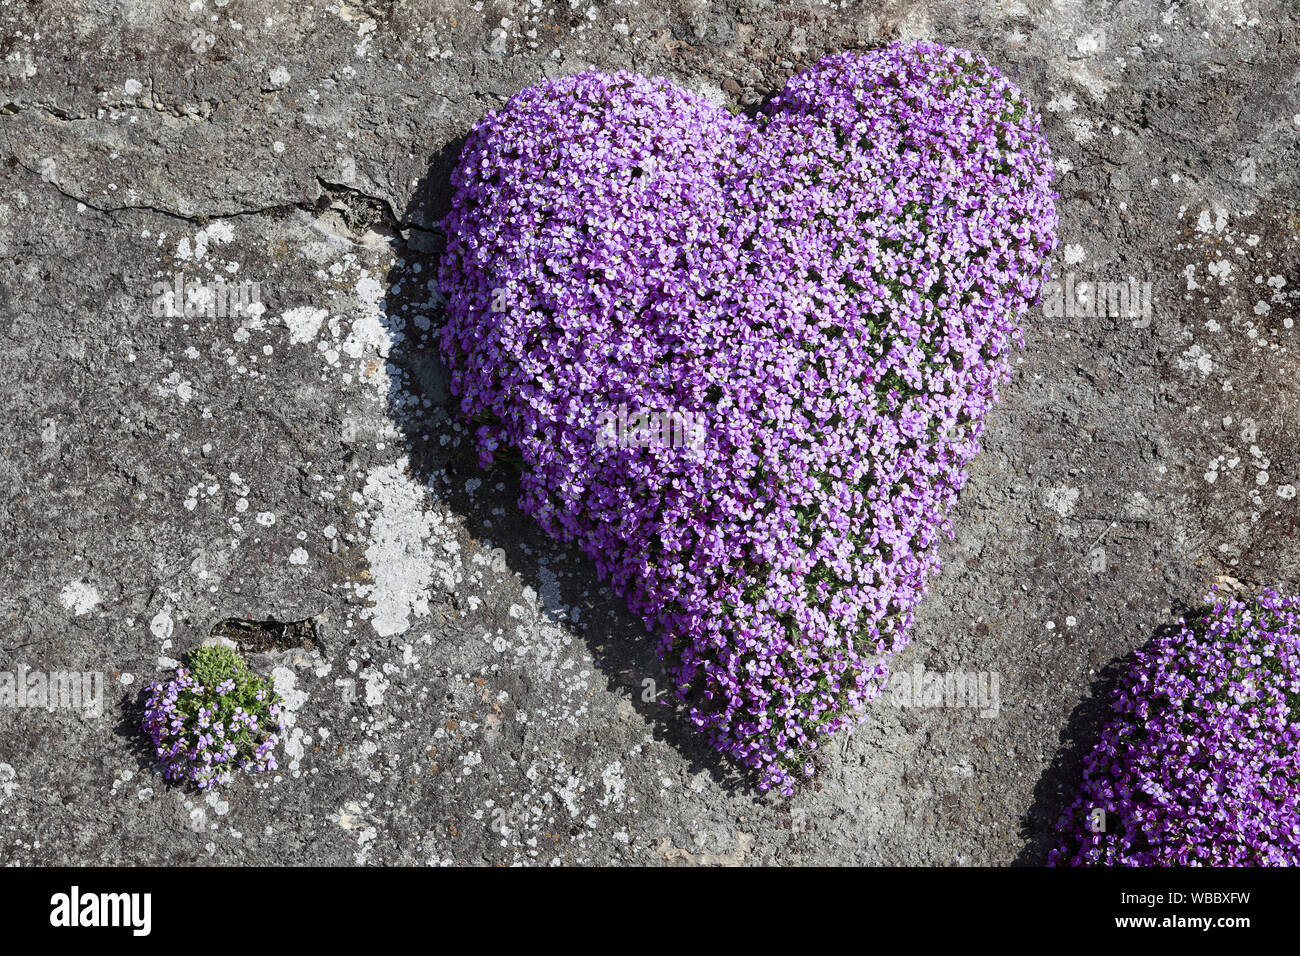 Flowering Rock Cress (Aubrieta sp.) In heart shape, growing on a wall, Switzerland Stock Photo